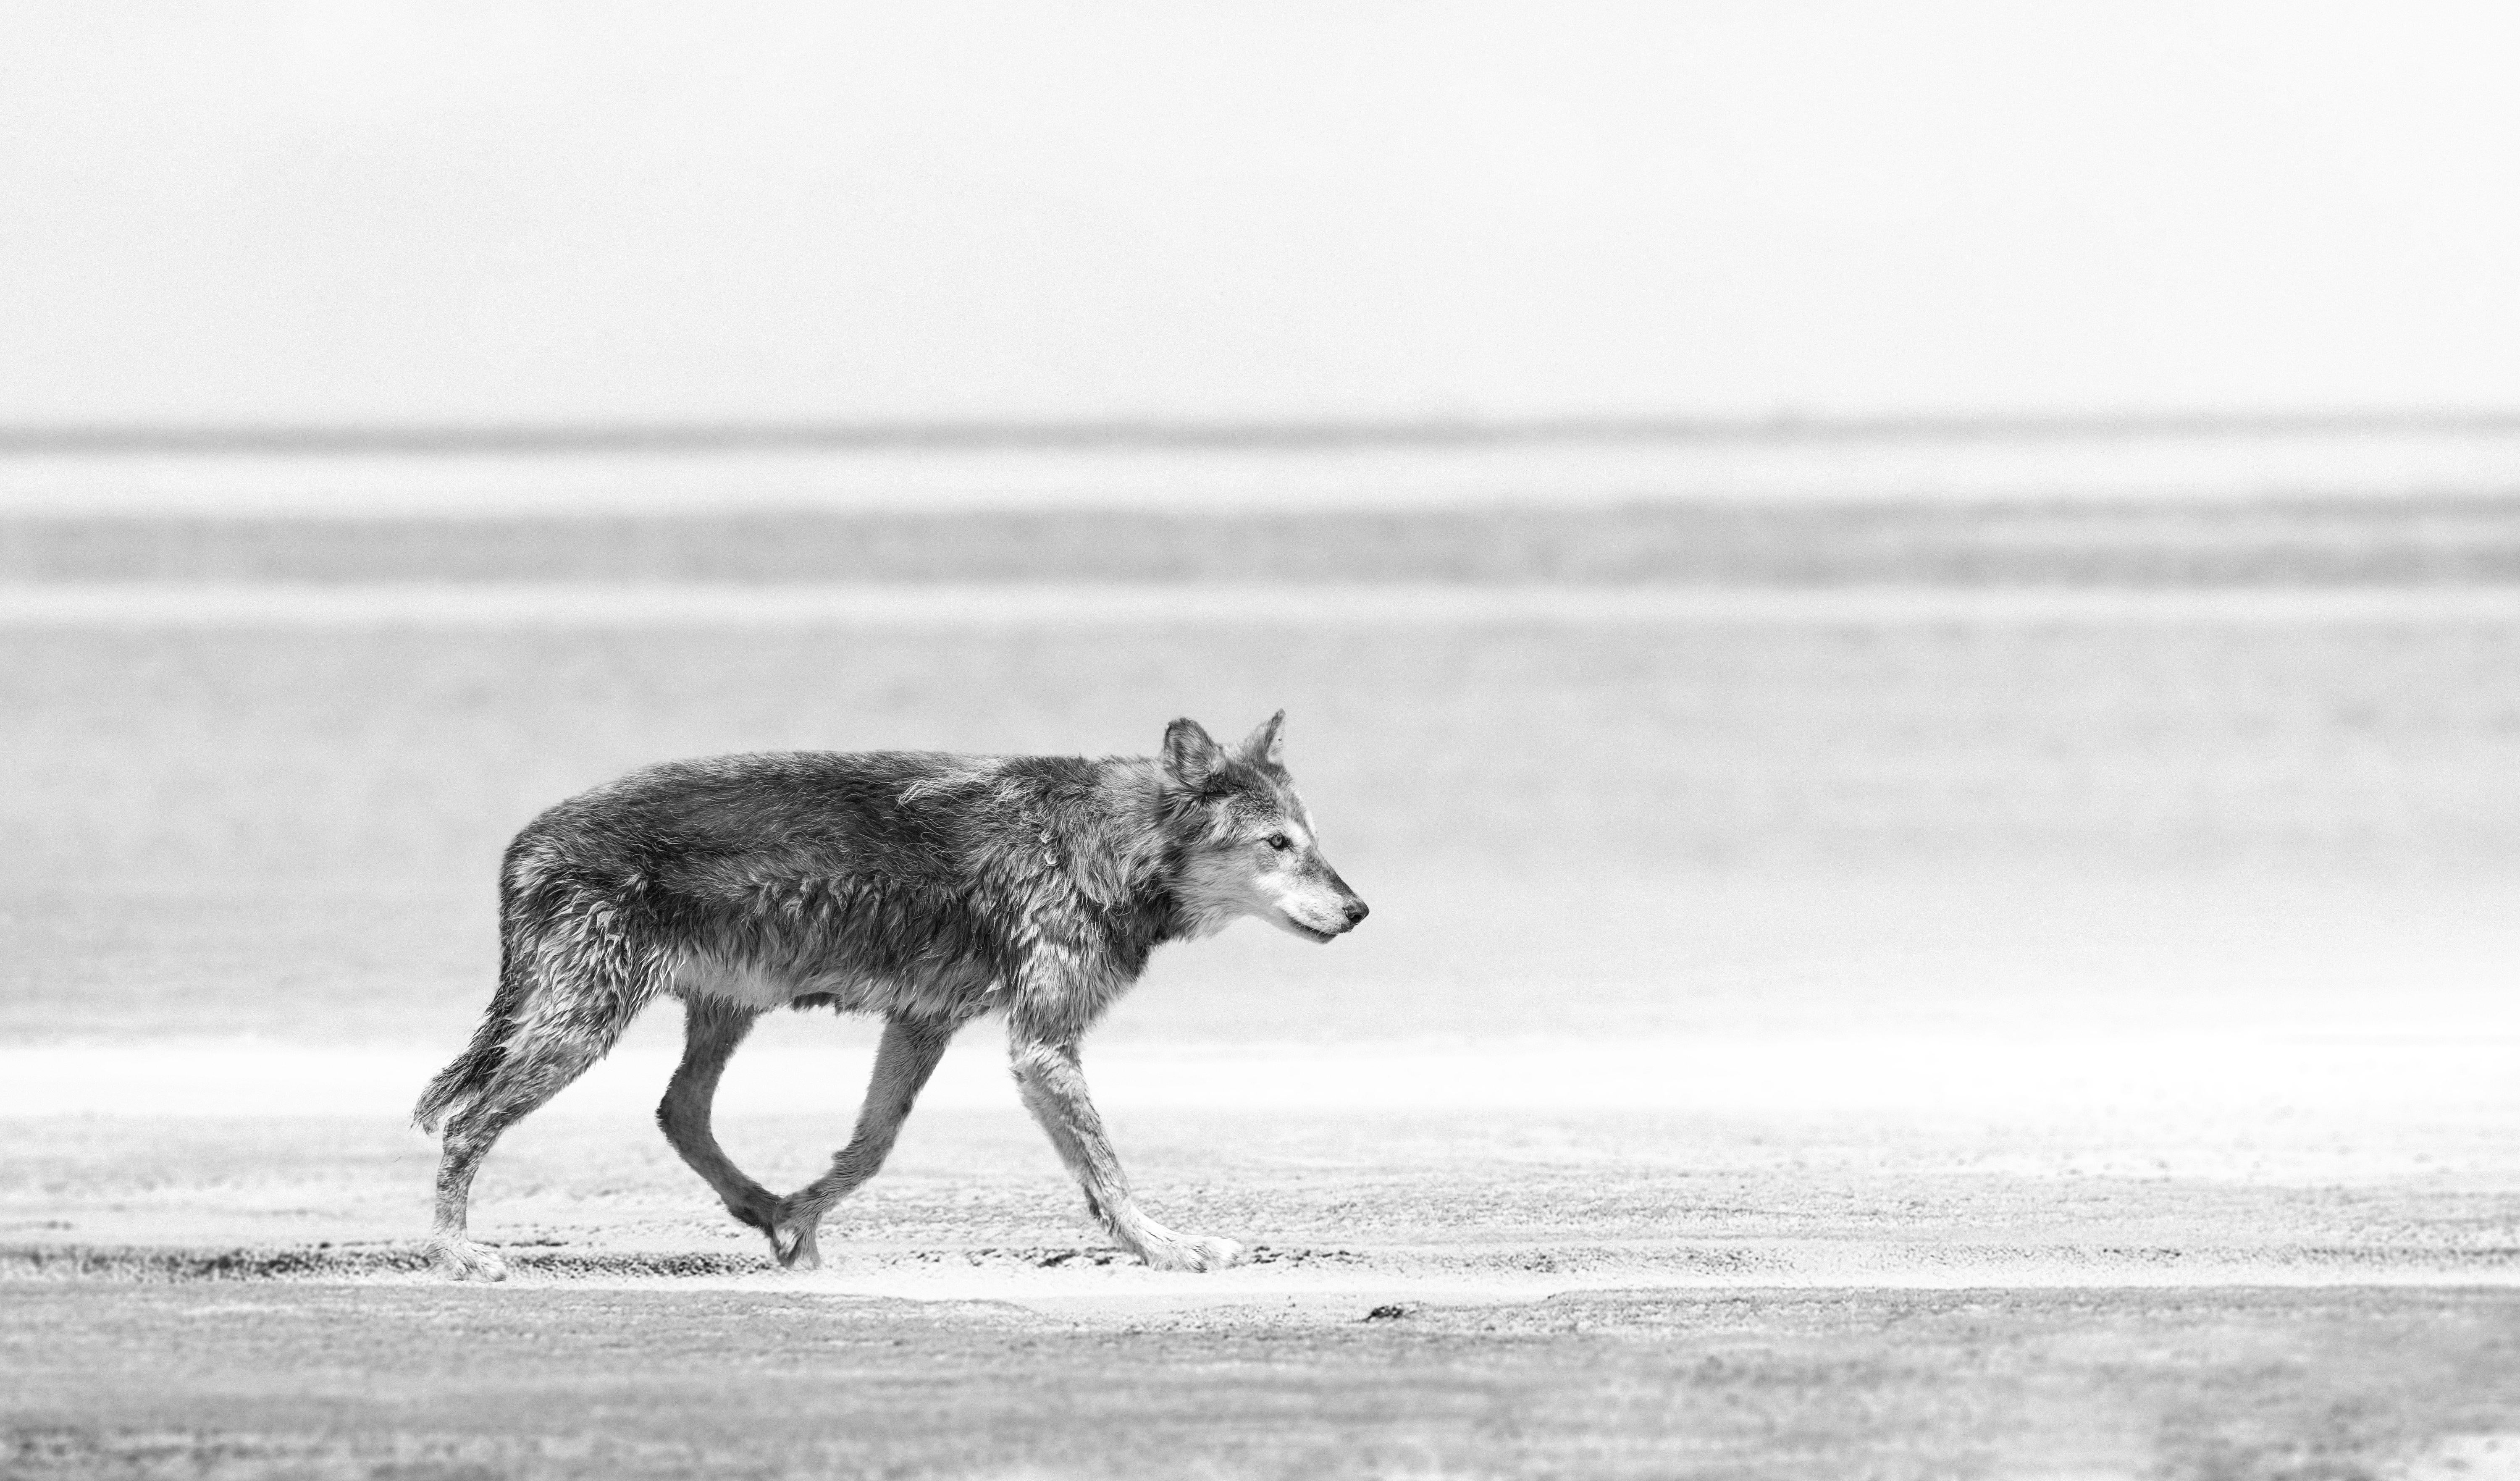 Black and White Photograph Shane Russeck -  "Sea Wolf" 30x60, Loup noir et blanc, Loups, Photographie Photographie Art